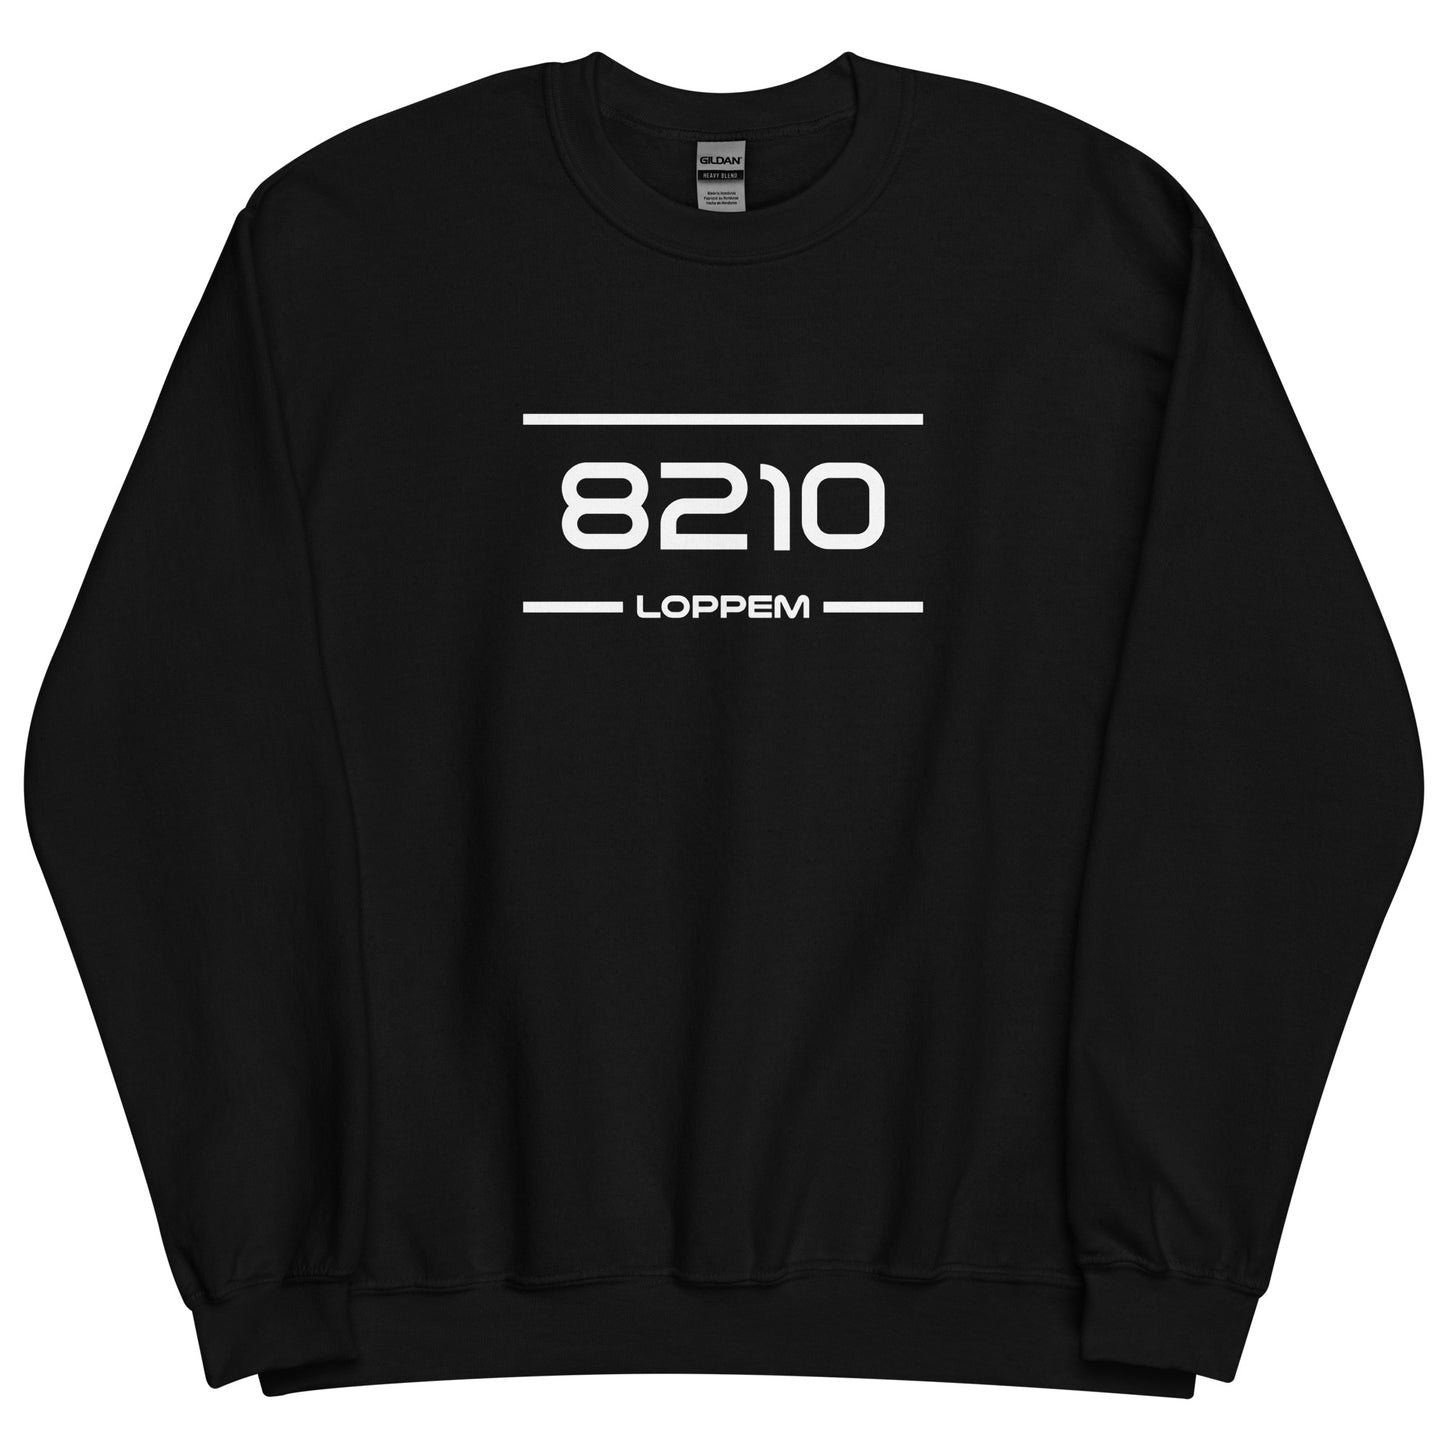 Sweater - 8210 - Loppem (M/V)